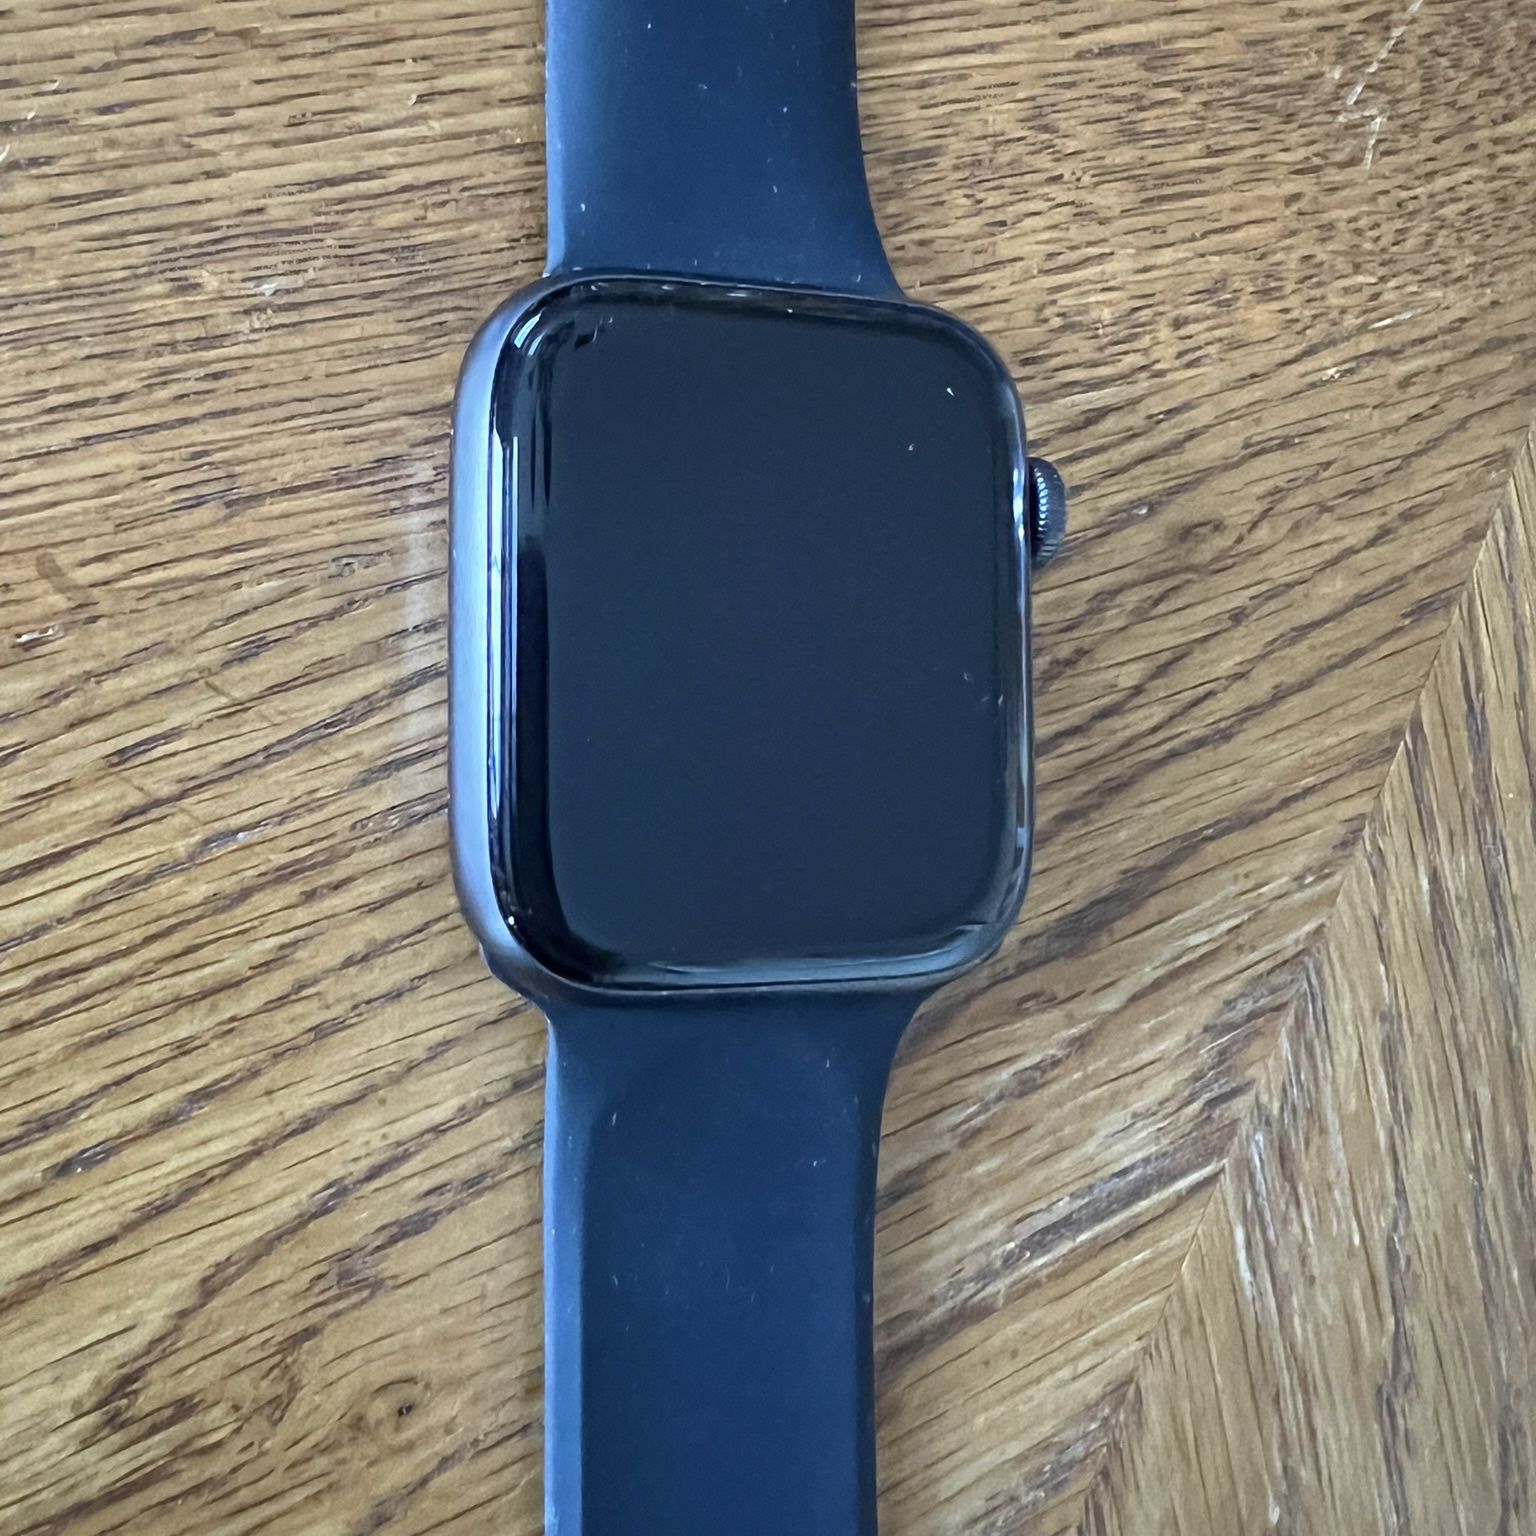 Apple Watch Series 5 GPS - Refurbished But Brand New 